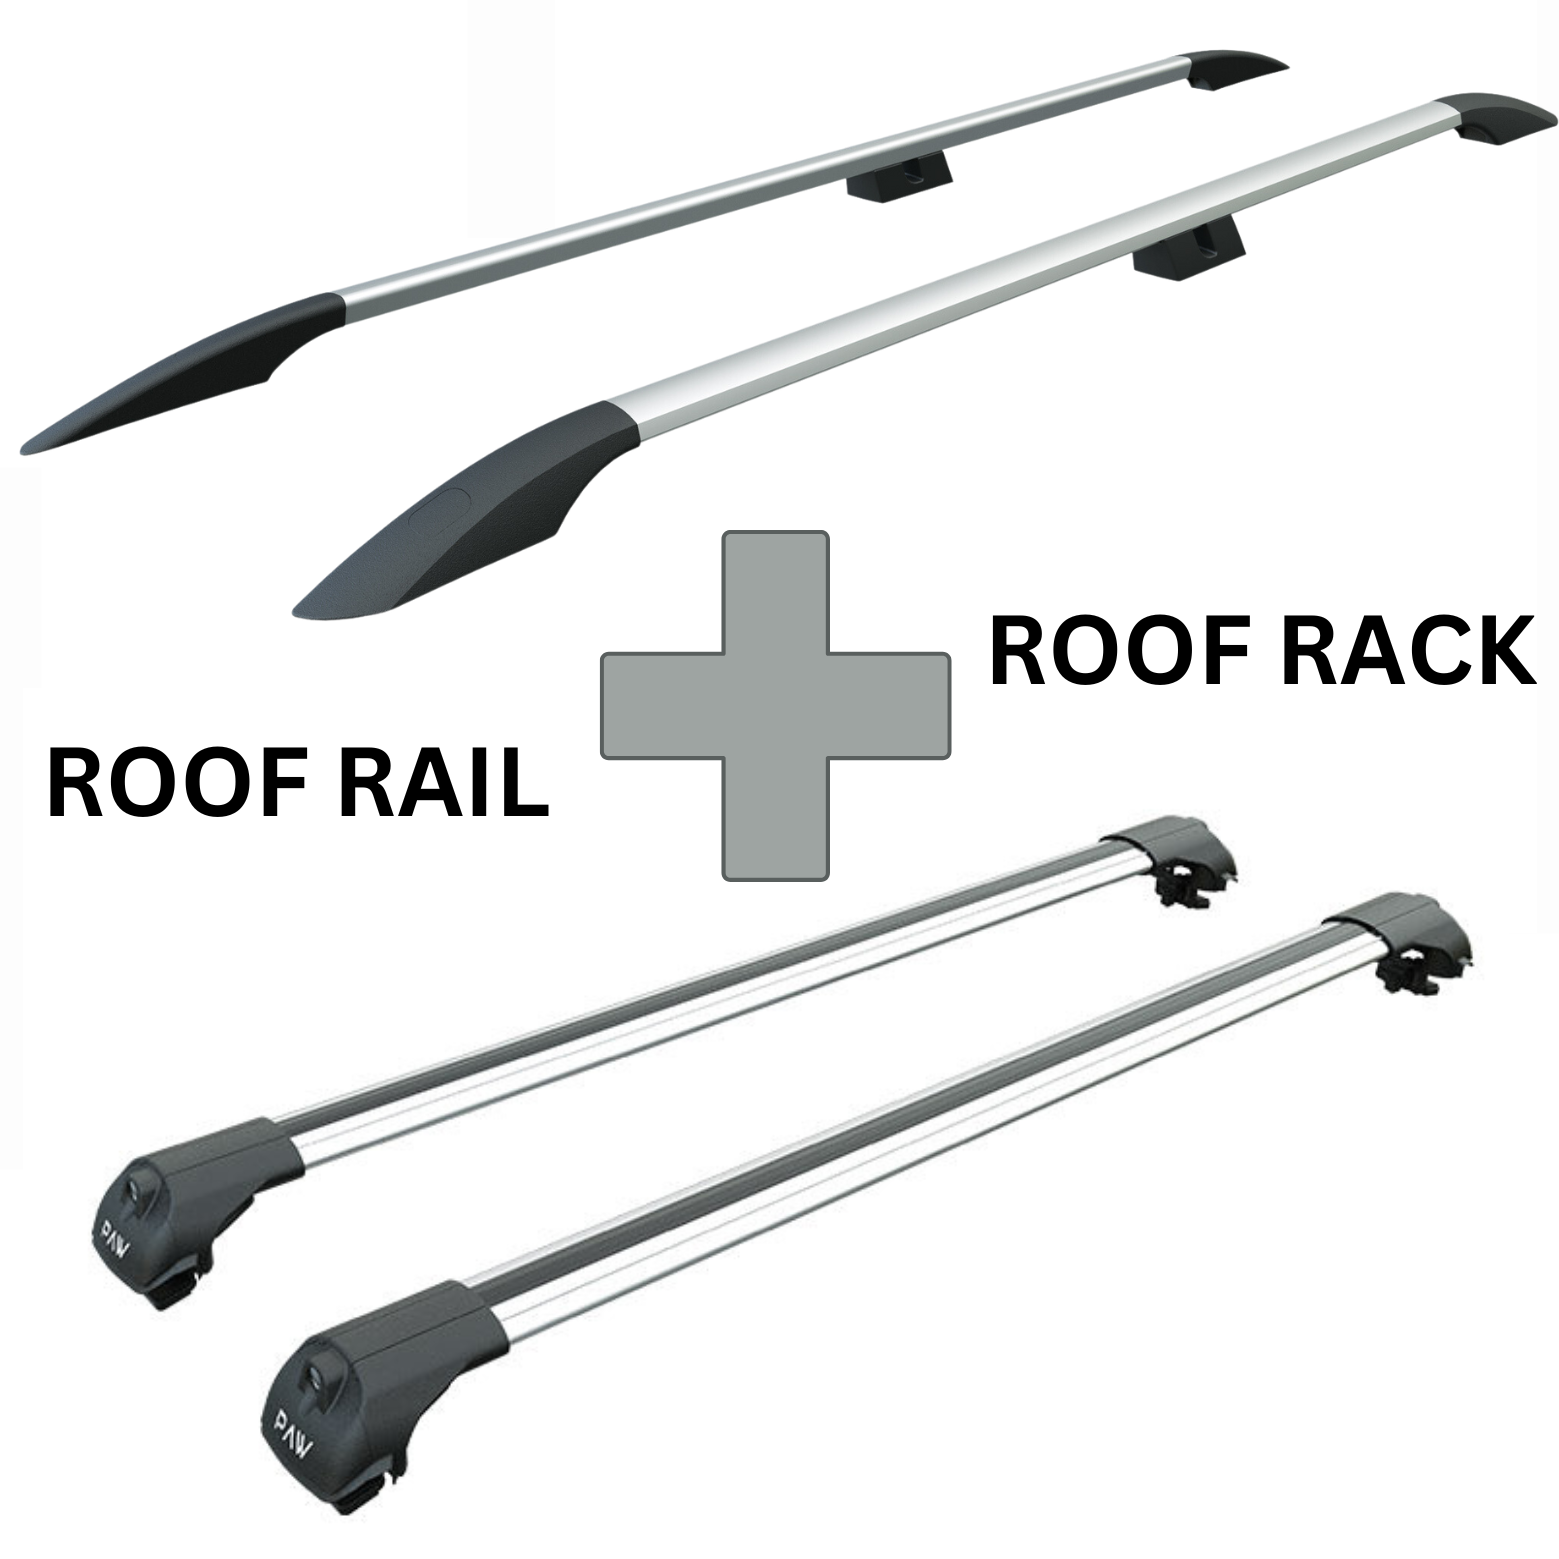 For Volkswagen Amarok 2009-16 Roof Side Rails and Roof Rack Cross Bar Alu Silver